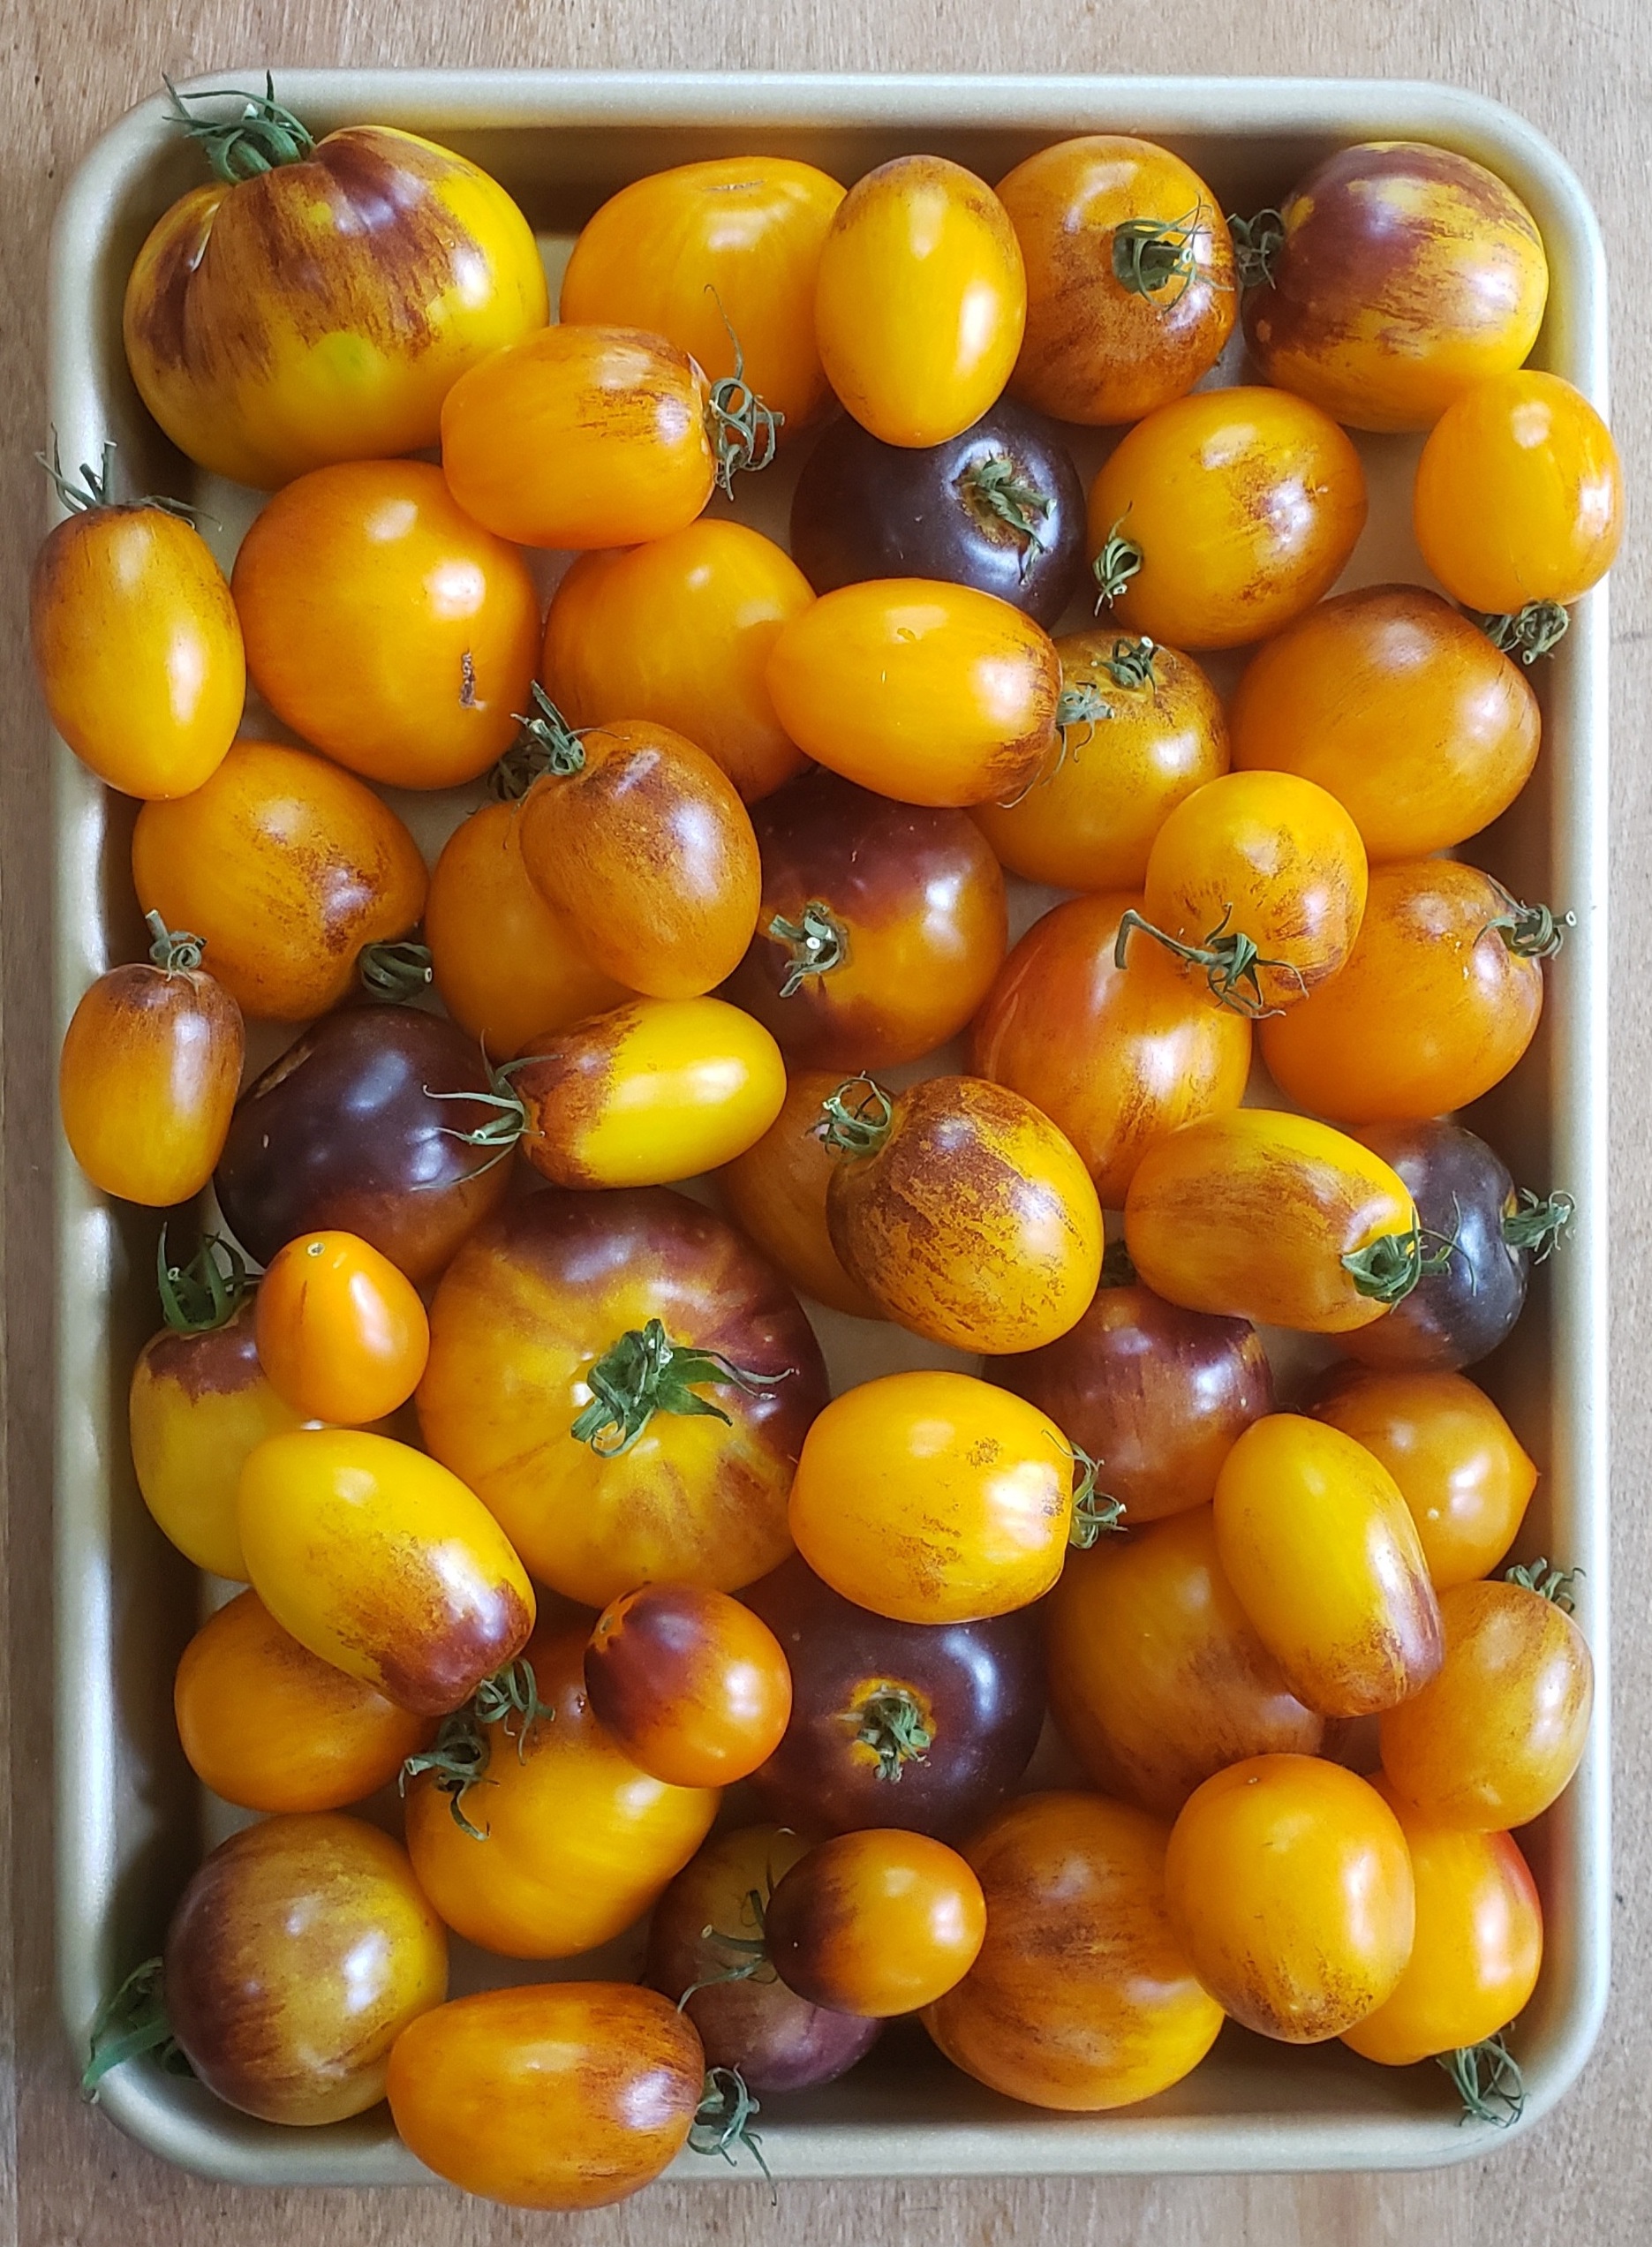 yellow tomatoes varieties